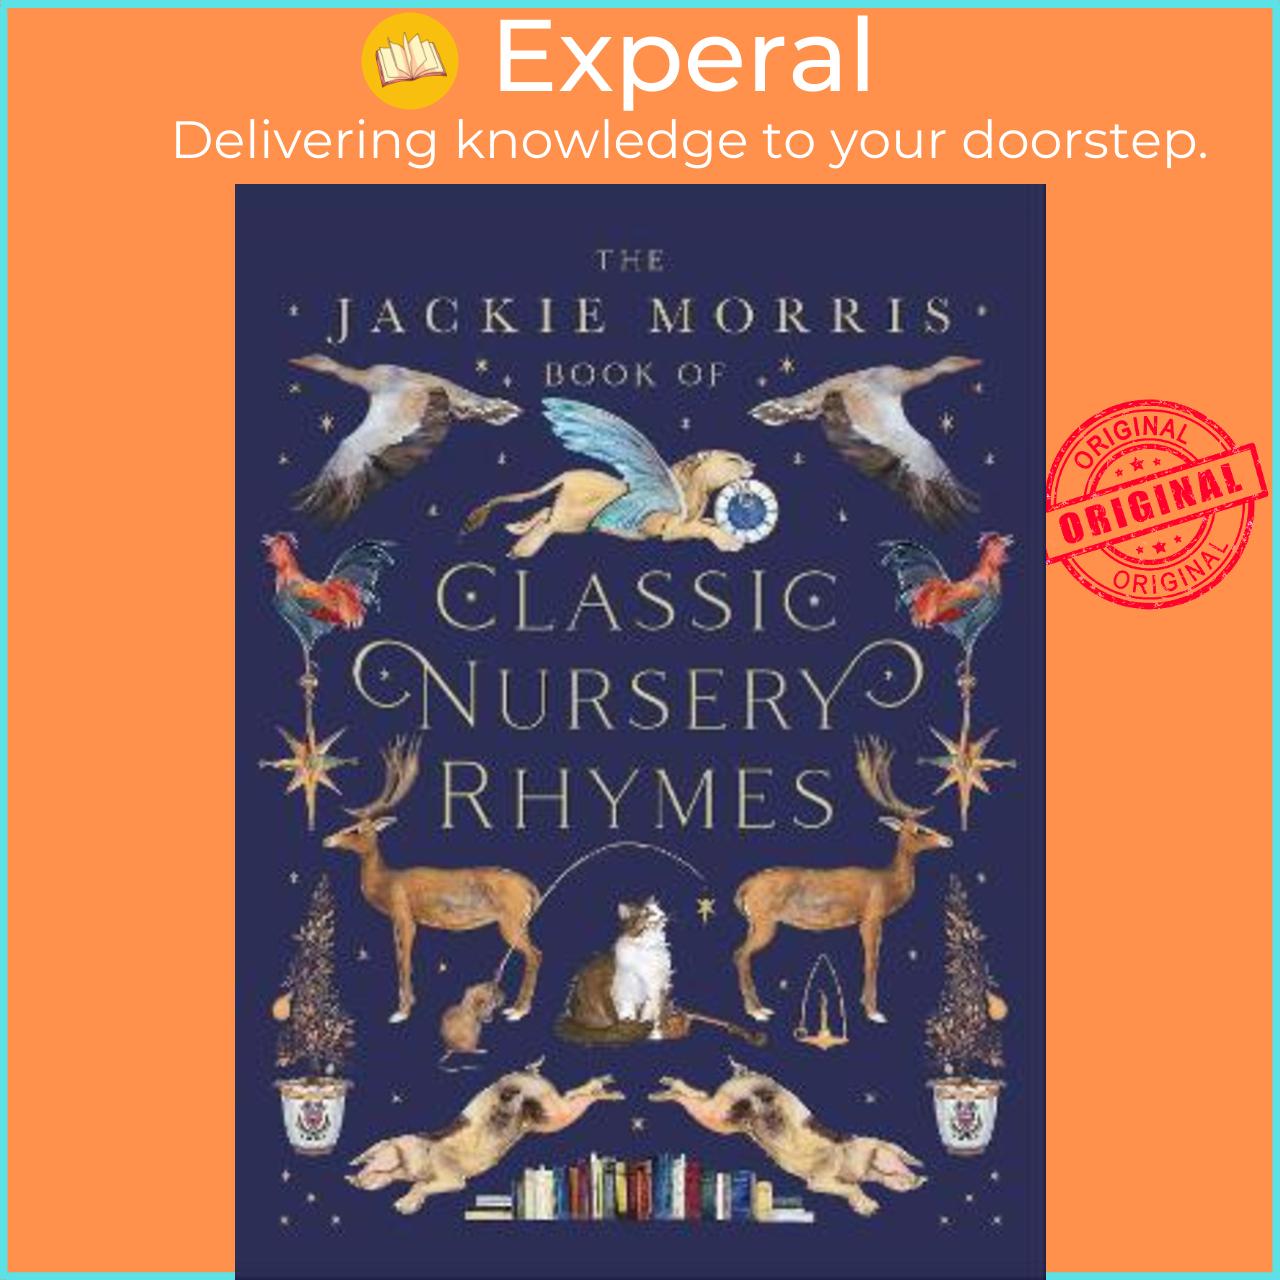 Hình ảnh Sách - The Jackie Morris Book of Classic Nursery Rhymes by Jackie Morris (UK edition, hardcover)